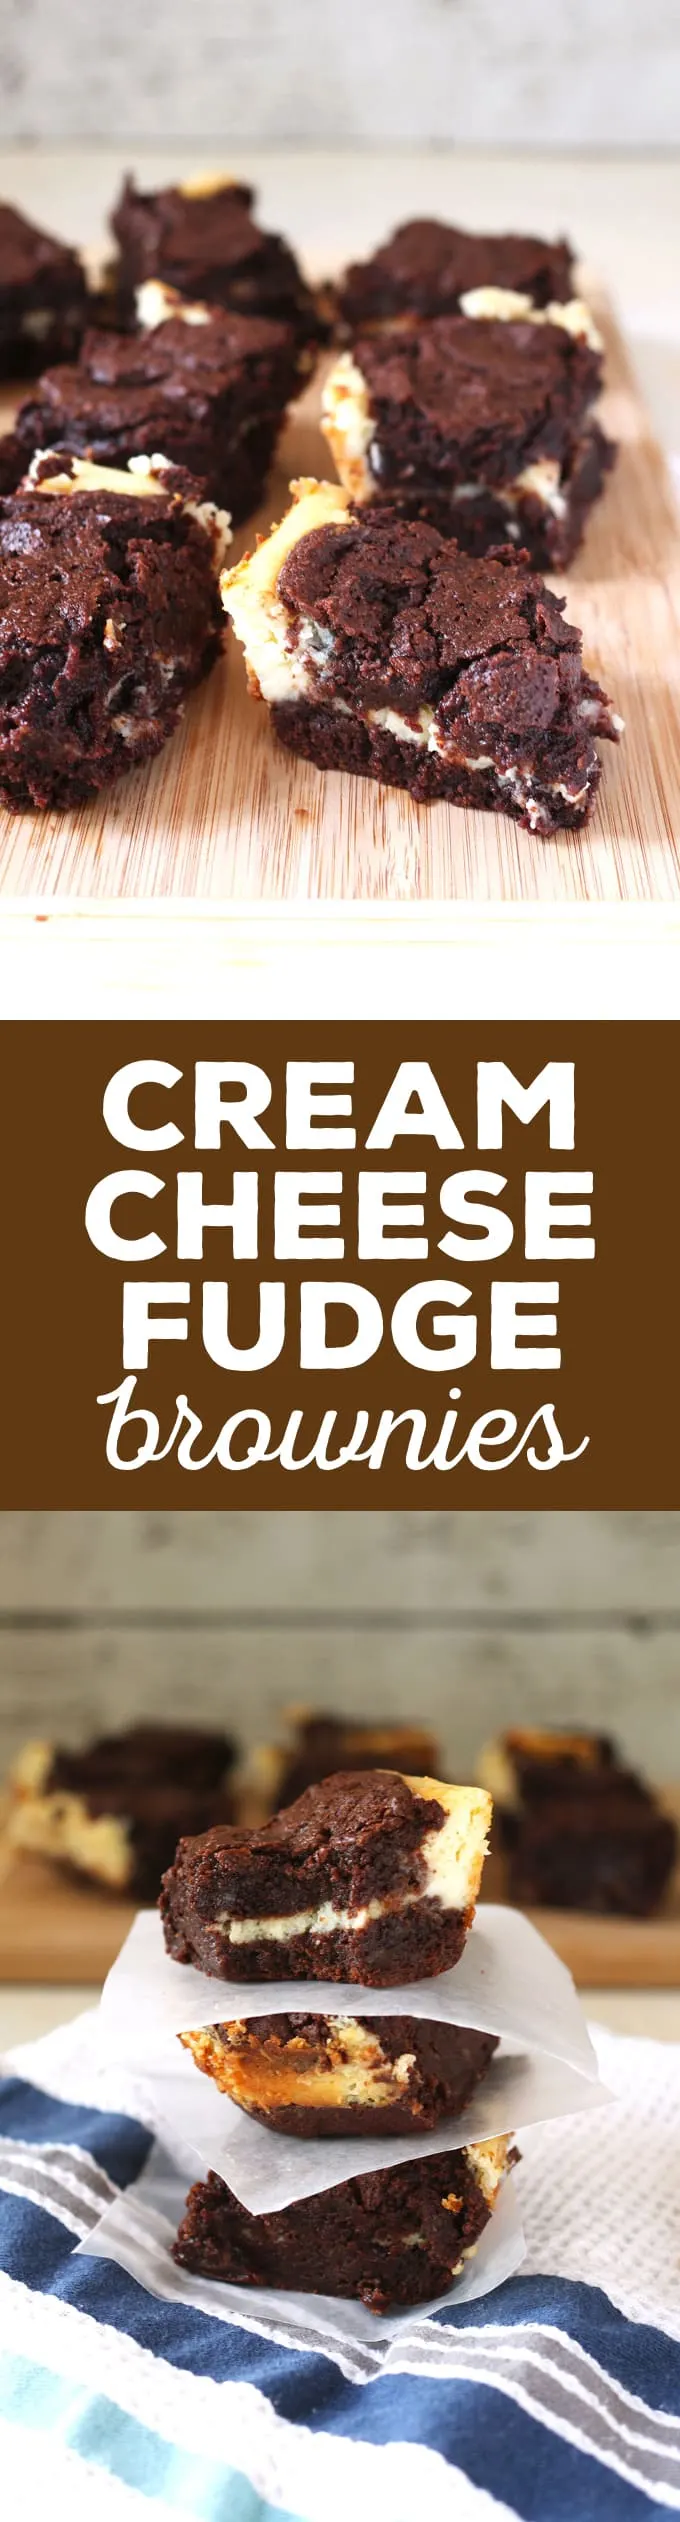 cream cheese fudge brownies pin